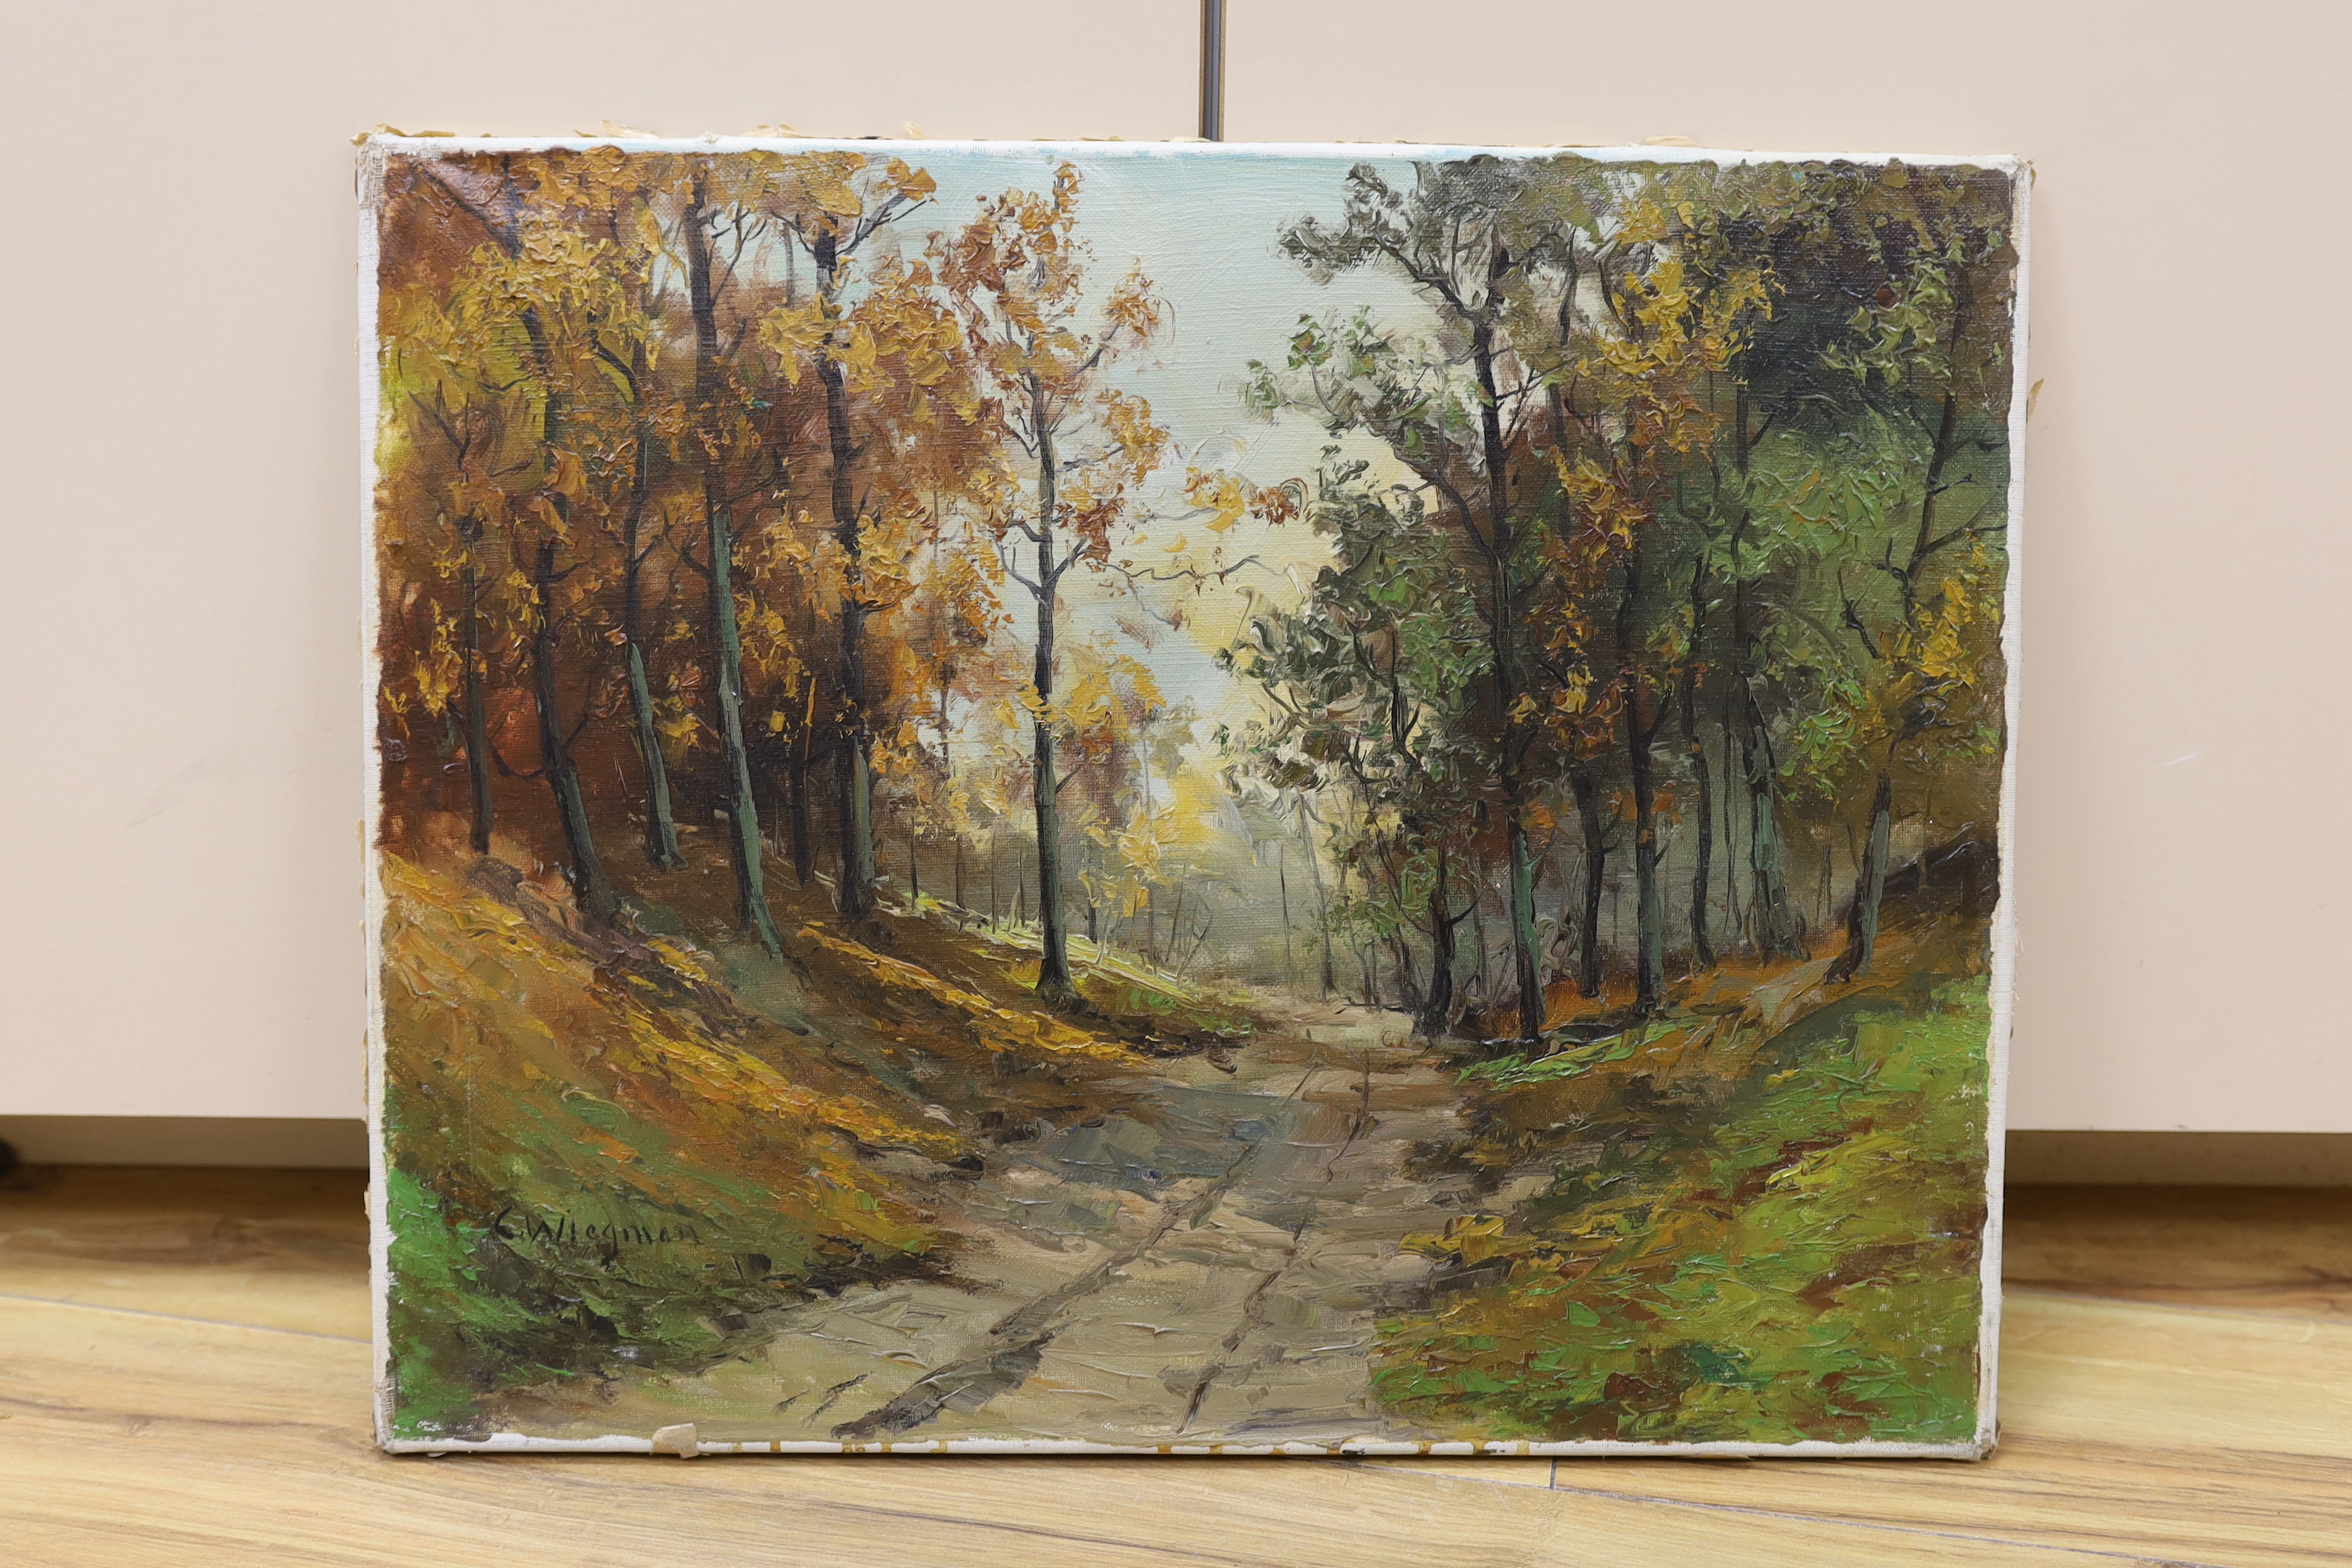 C. Wiegman (20th. C) oil on canvas, Woodland track, signed, 40 x 50cm, unframed